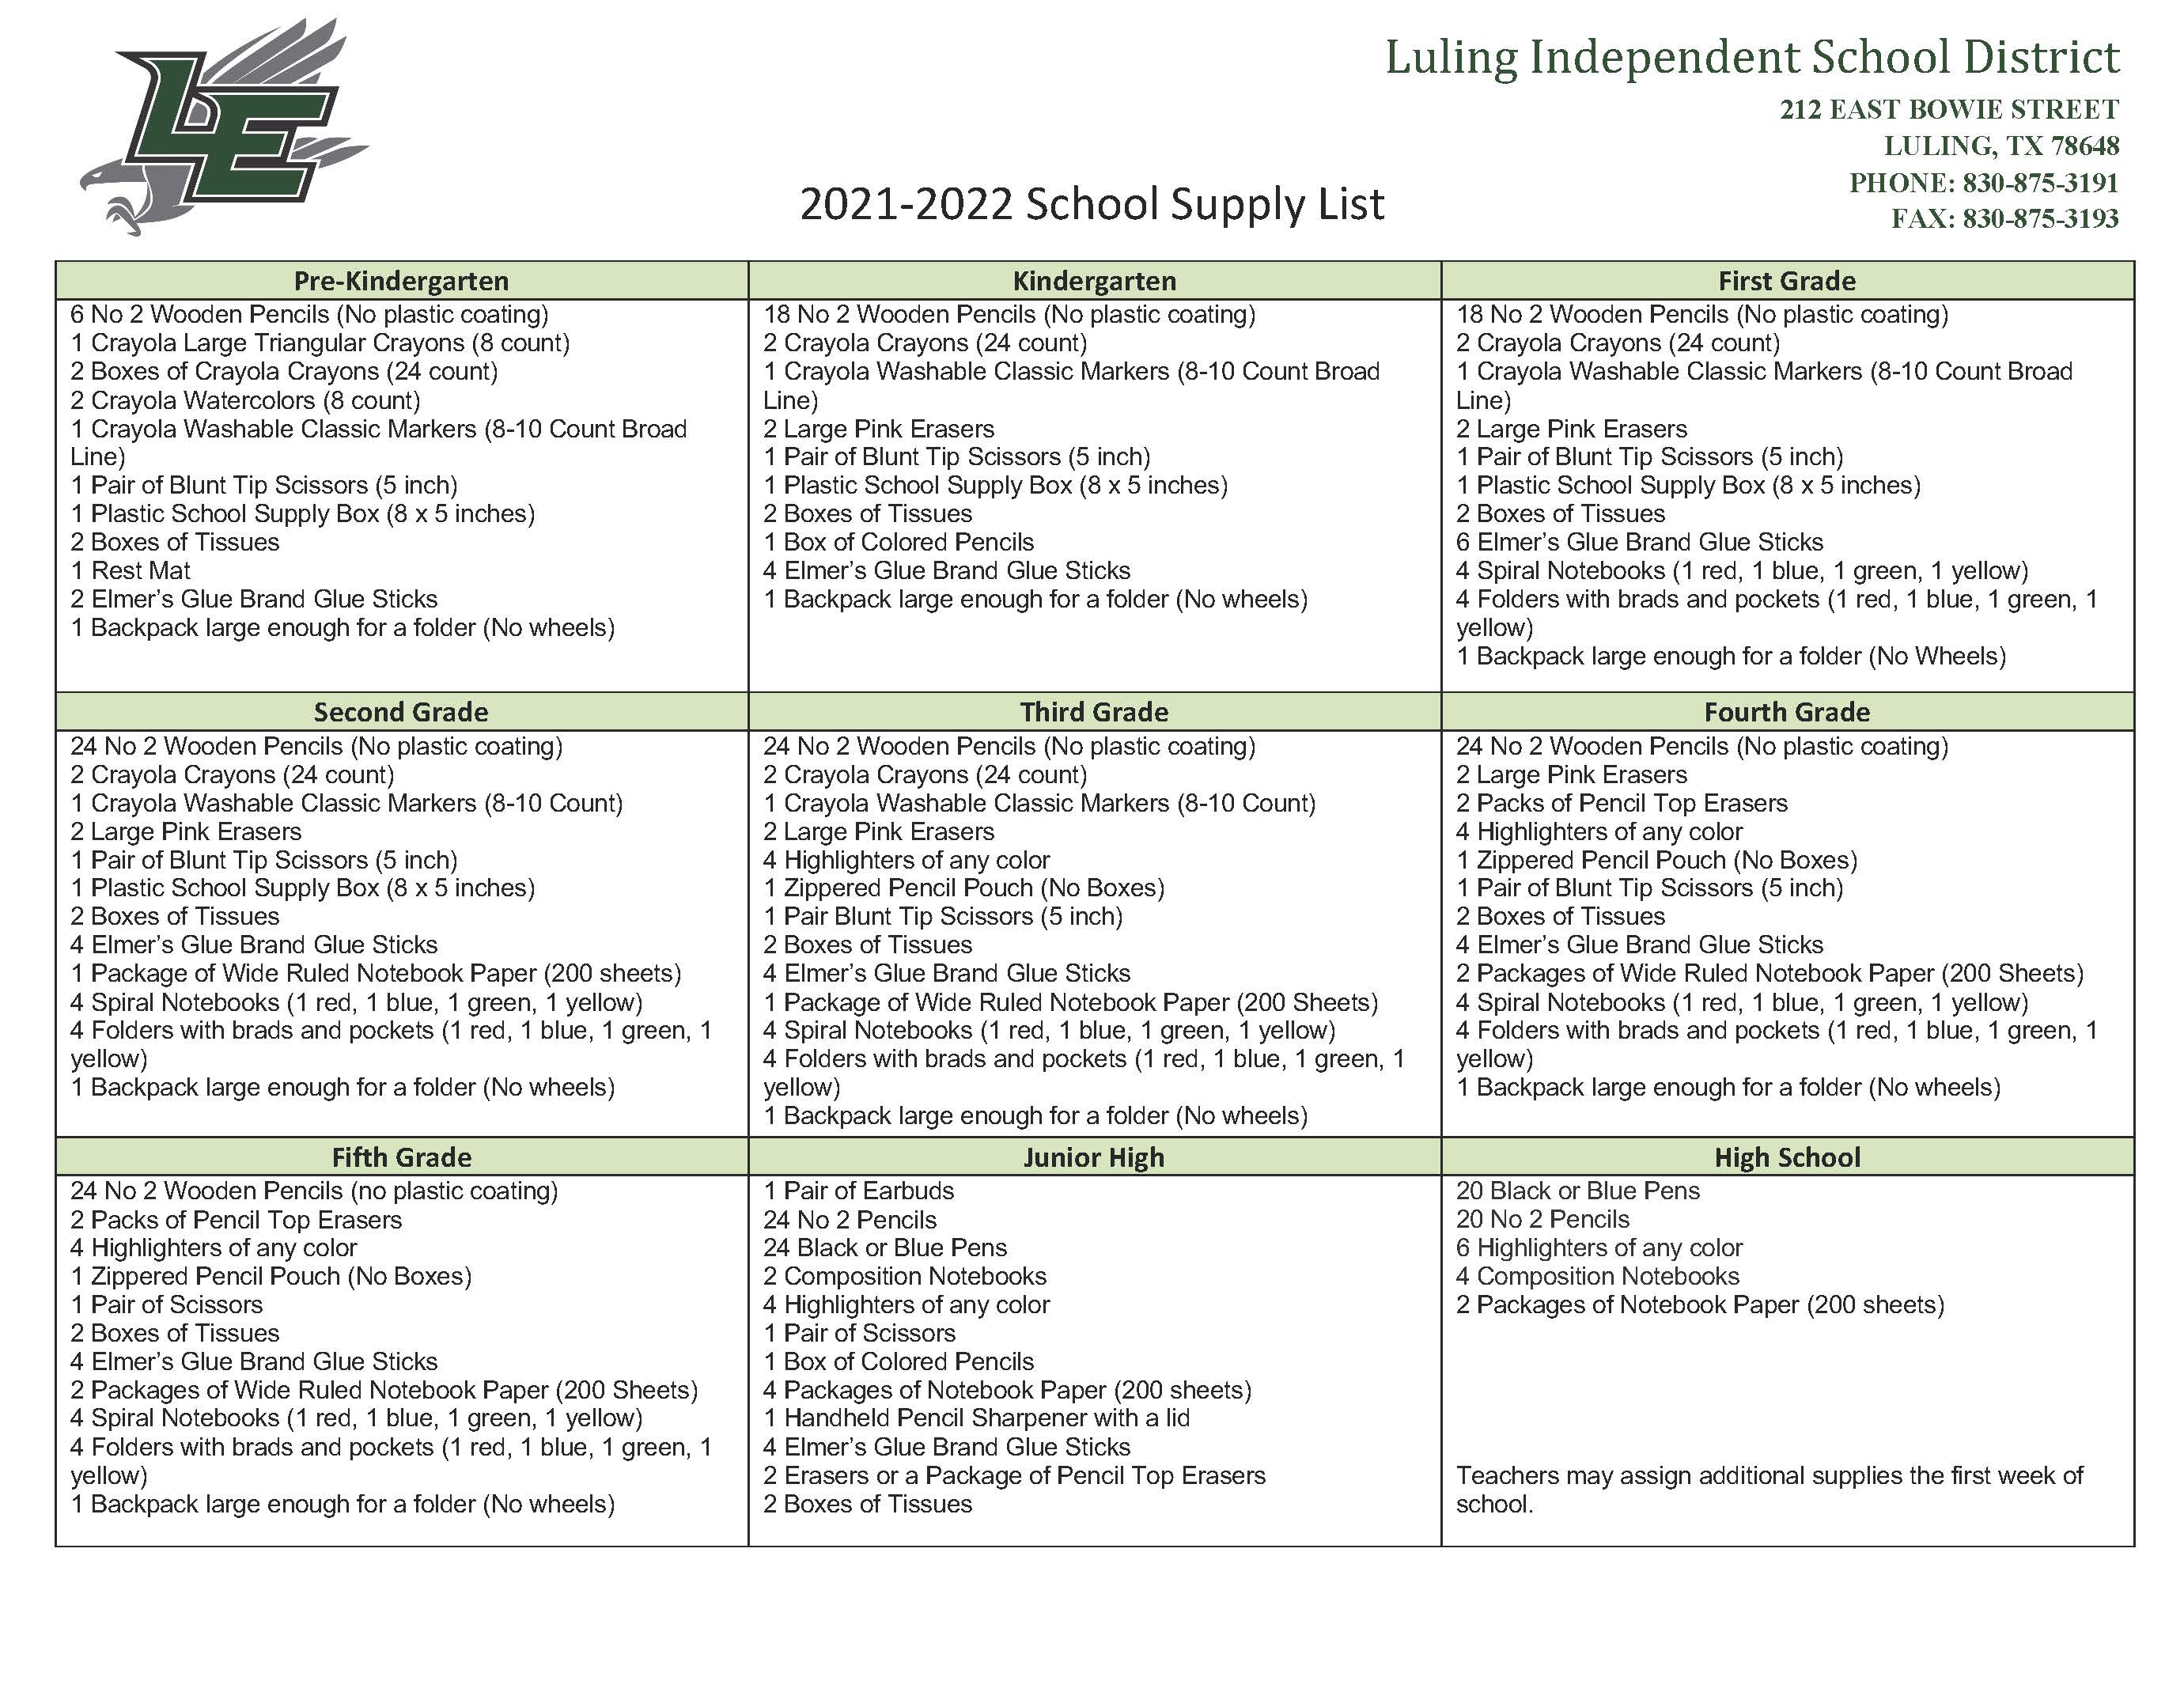 2021-22 School supply list